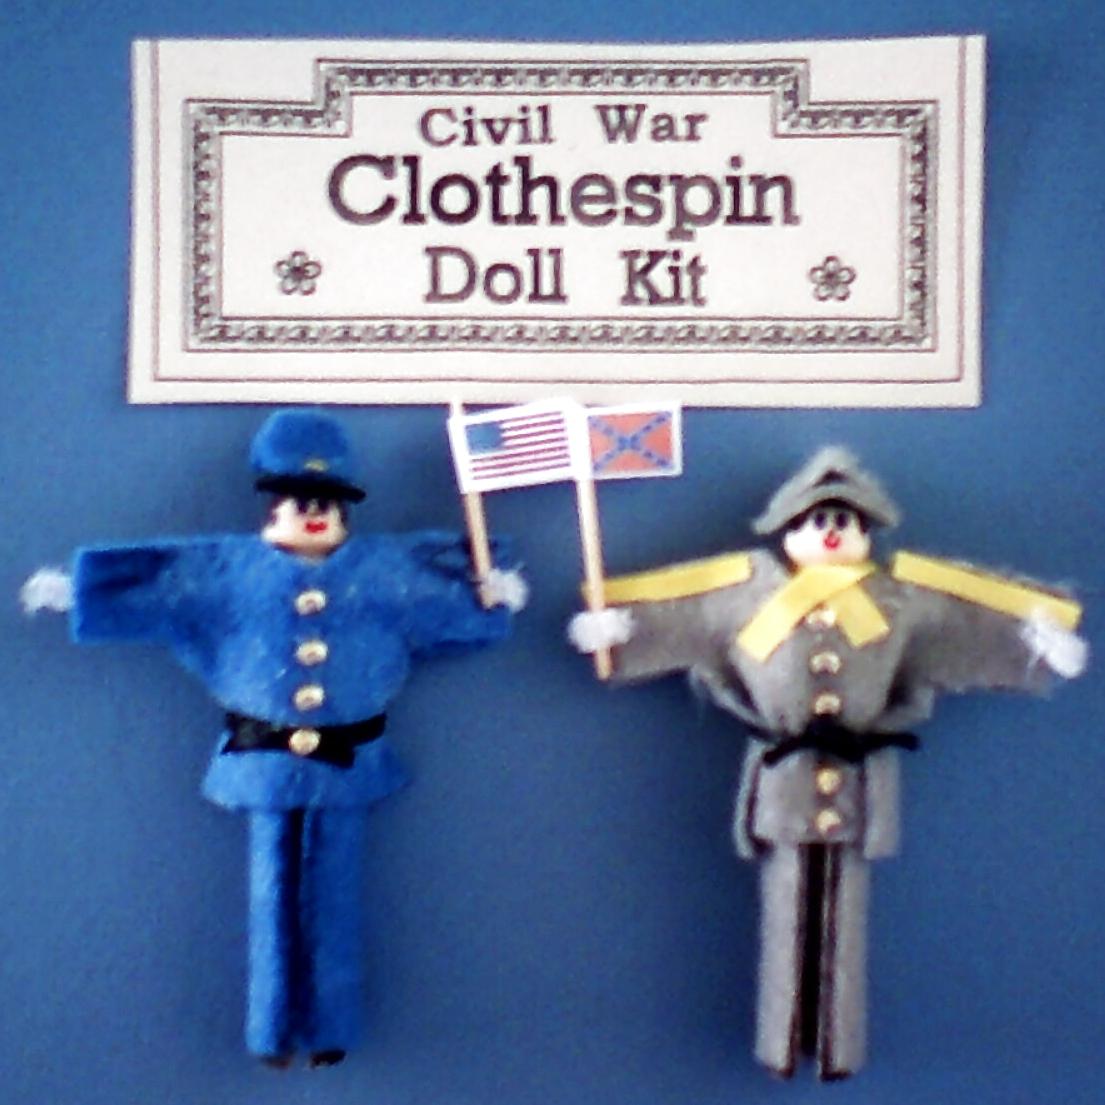 Civil war clothespin dolls